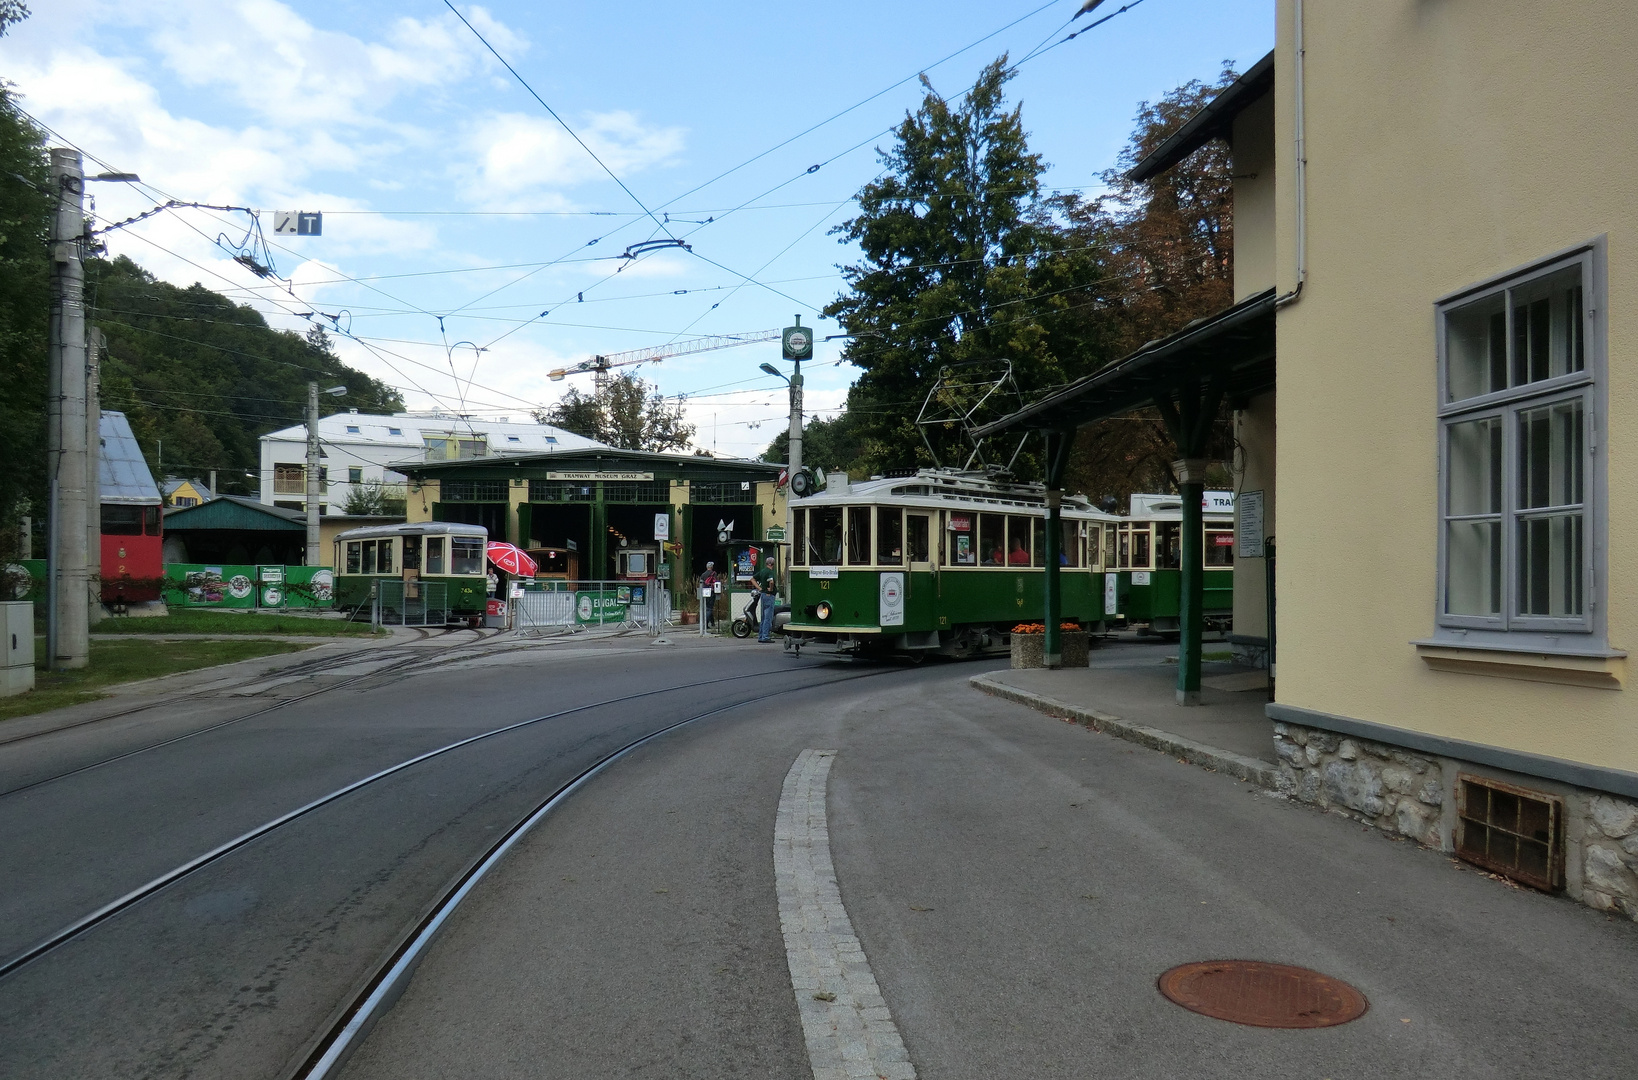 Graz Tramwaymuseum ....